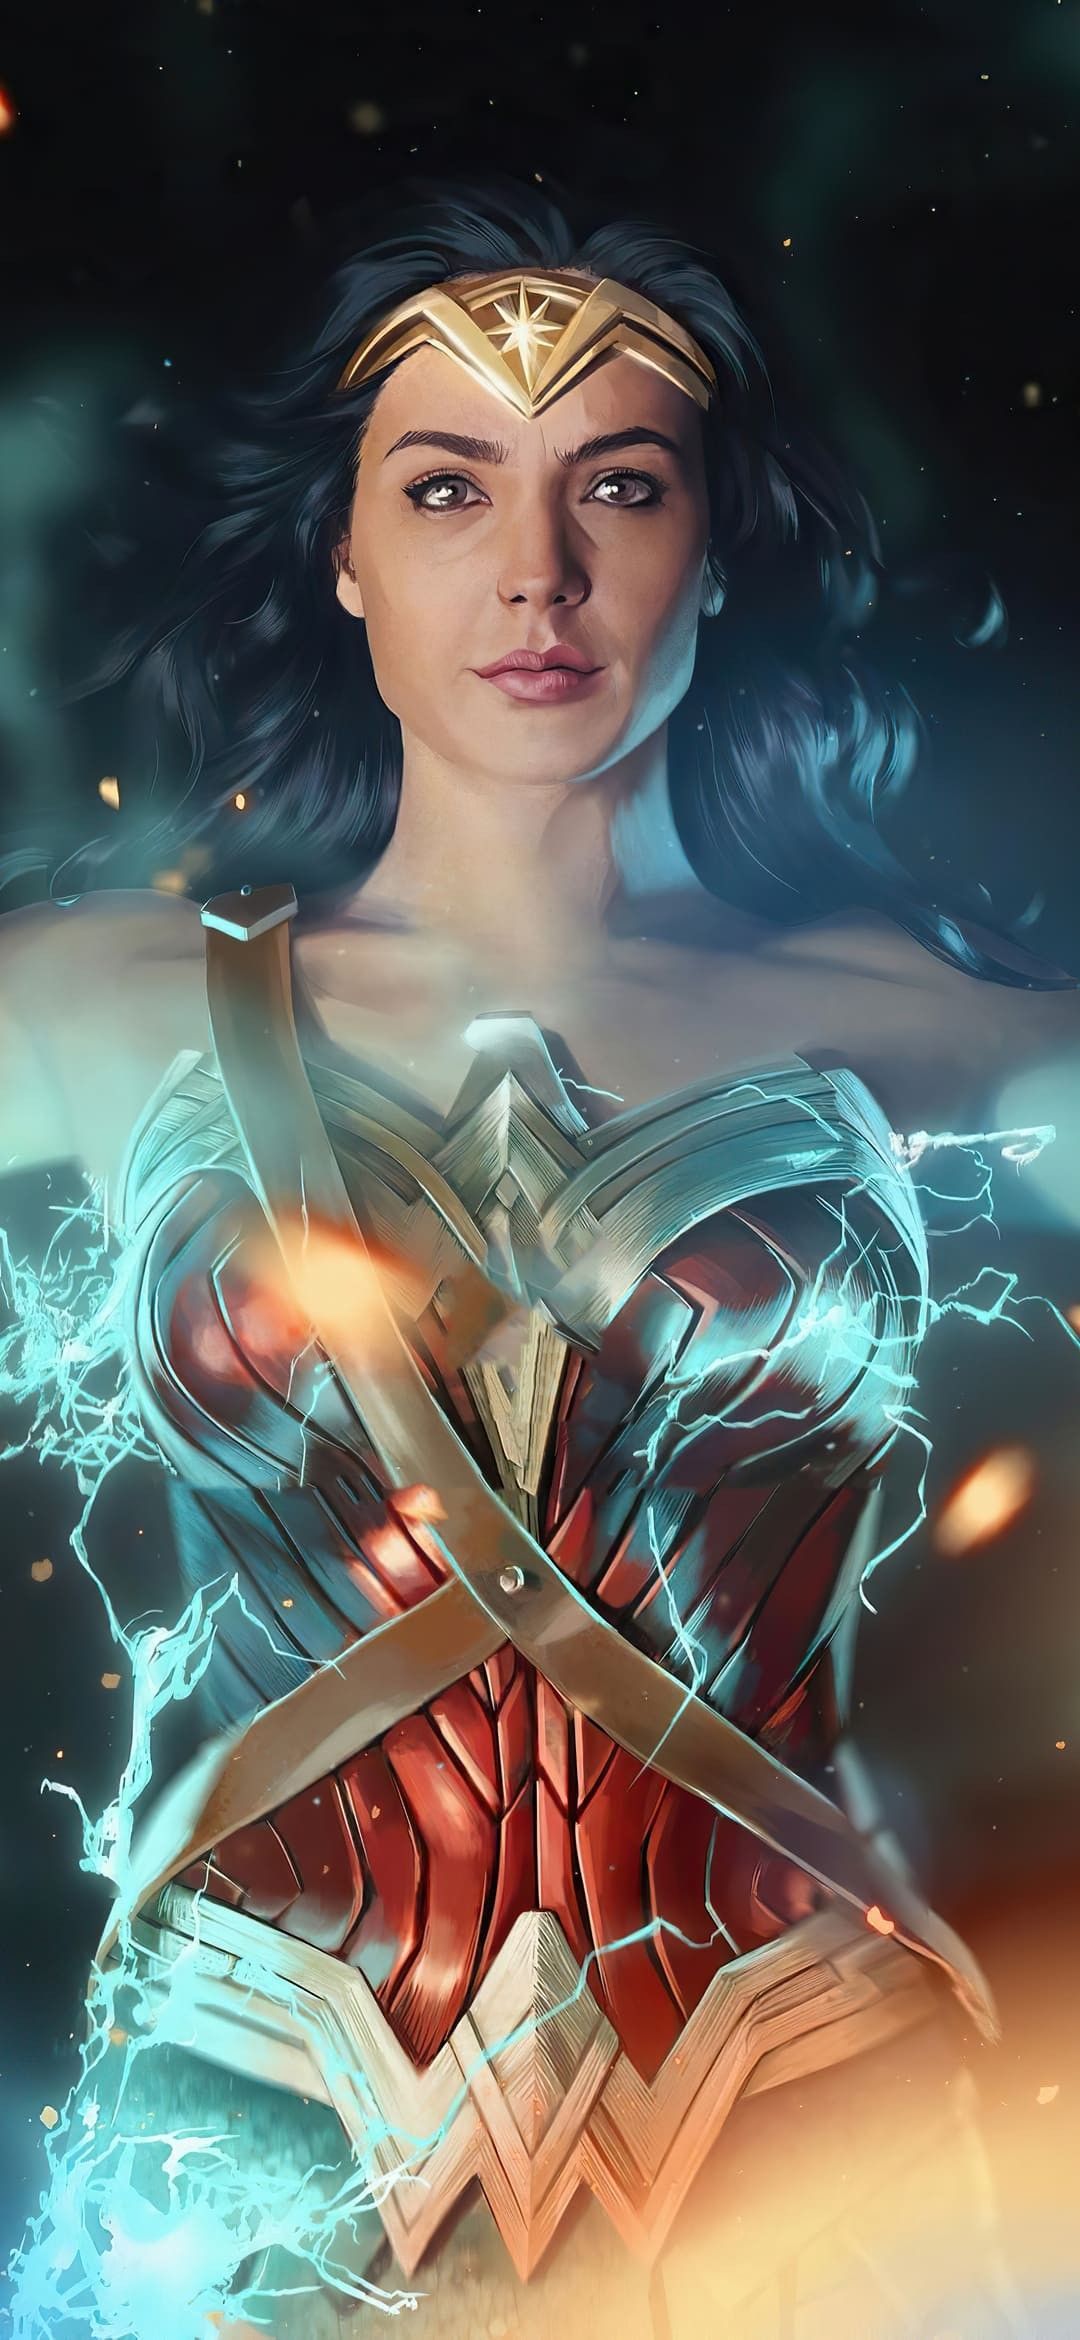 Wonder Woman iPhone Wallpaper. Wonder woman wallpaper, Hero wallpaper, Wonder woman background